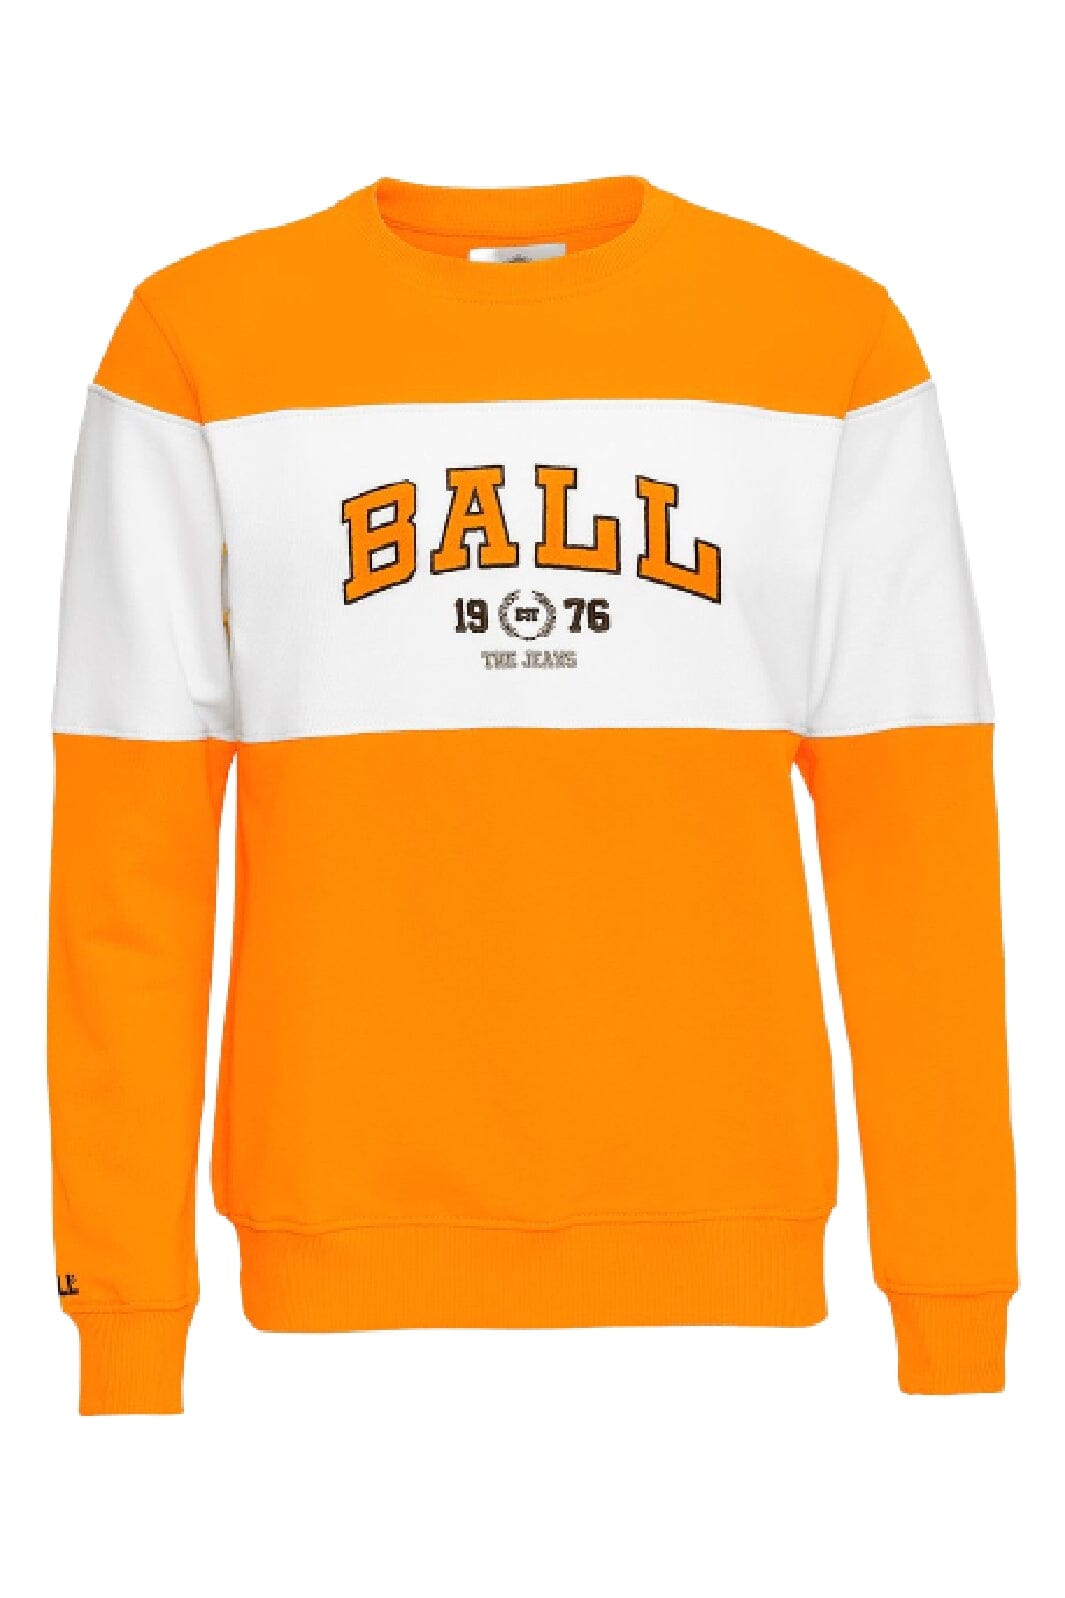 Ball - J. Montana - Atumn Glorry Sweatshirts 